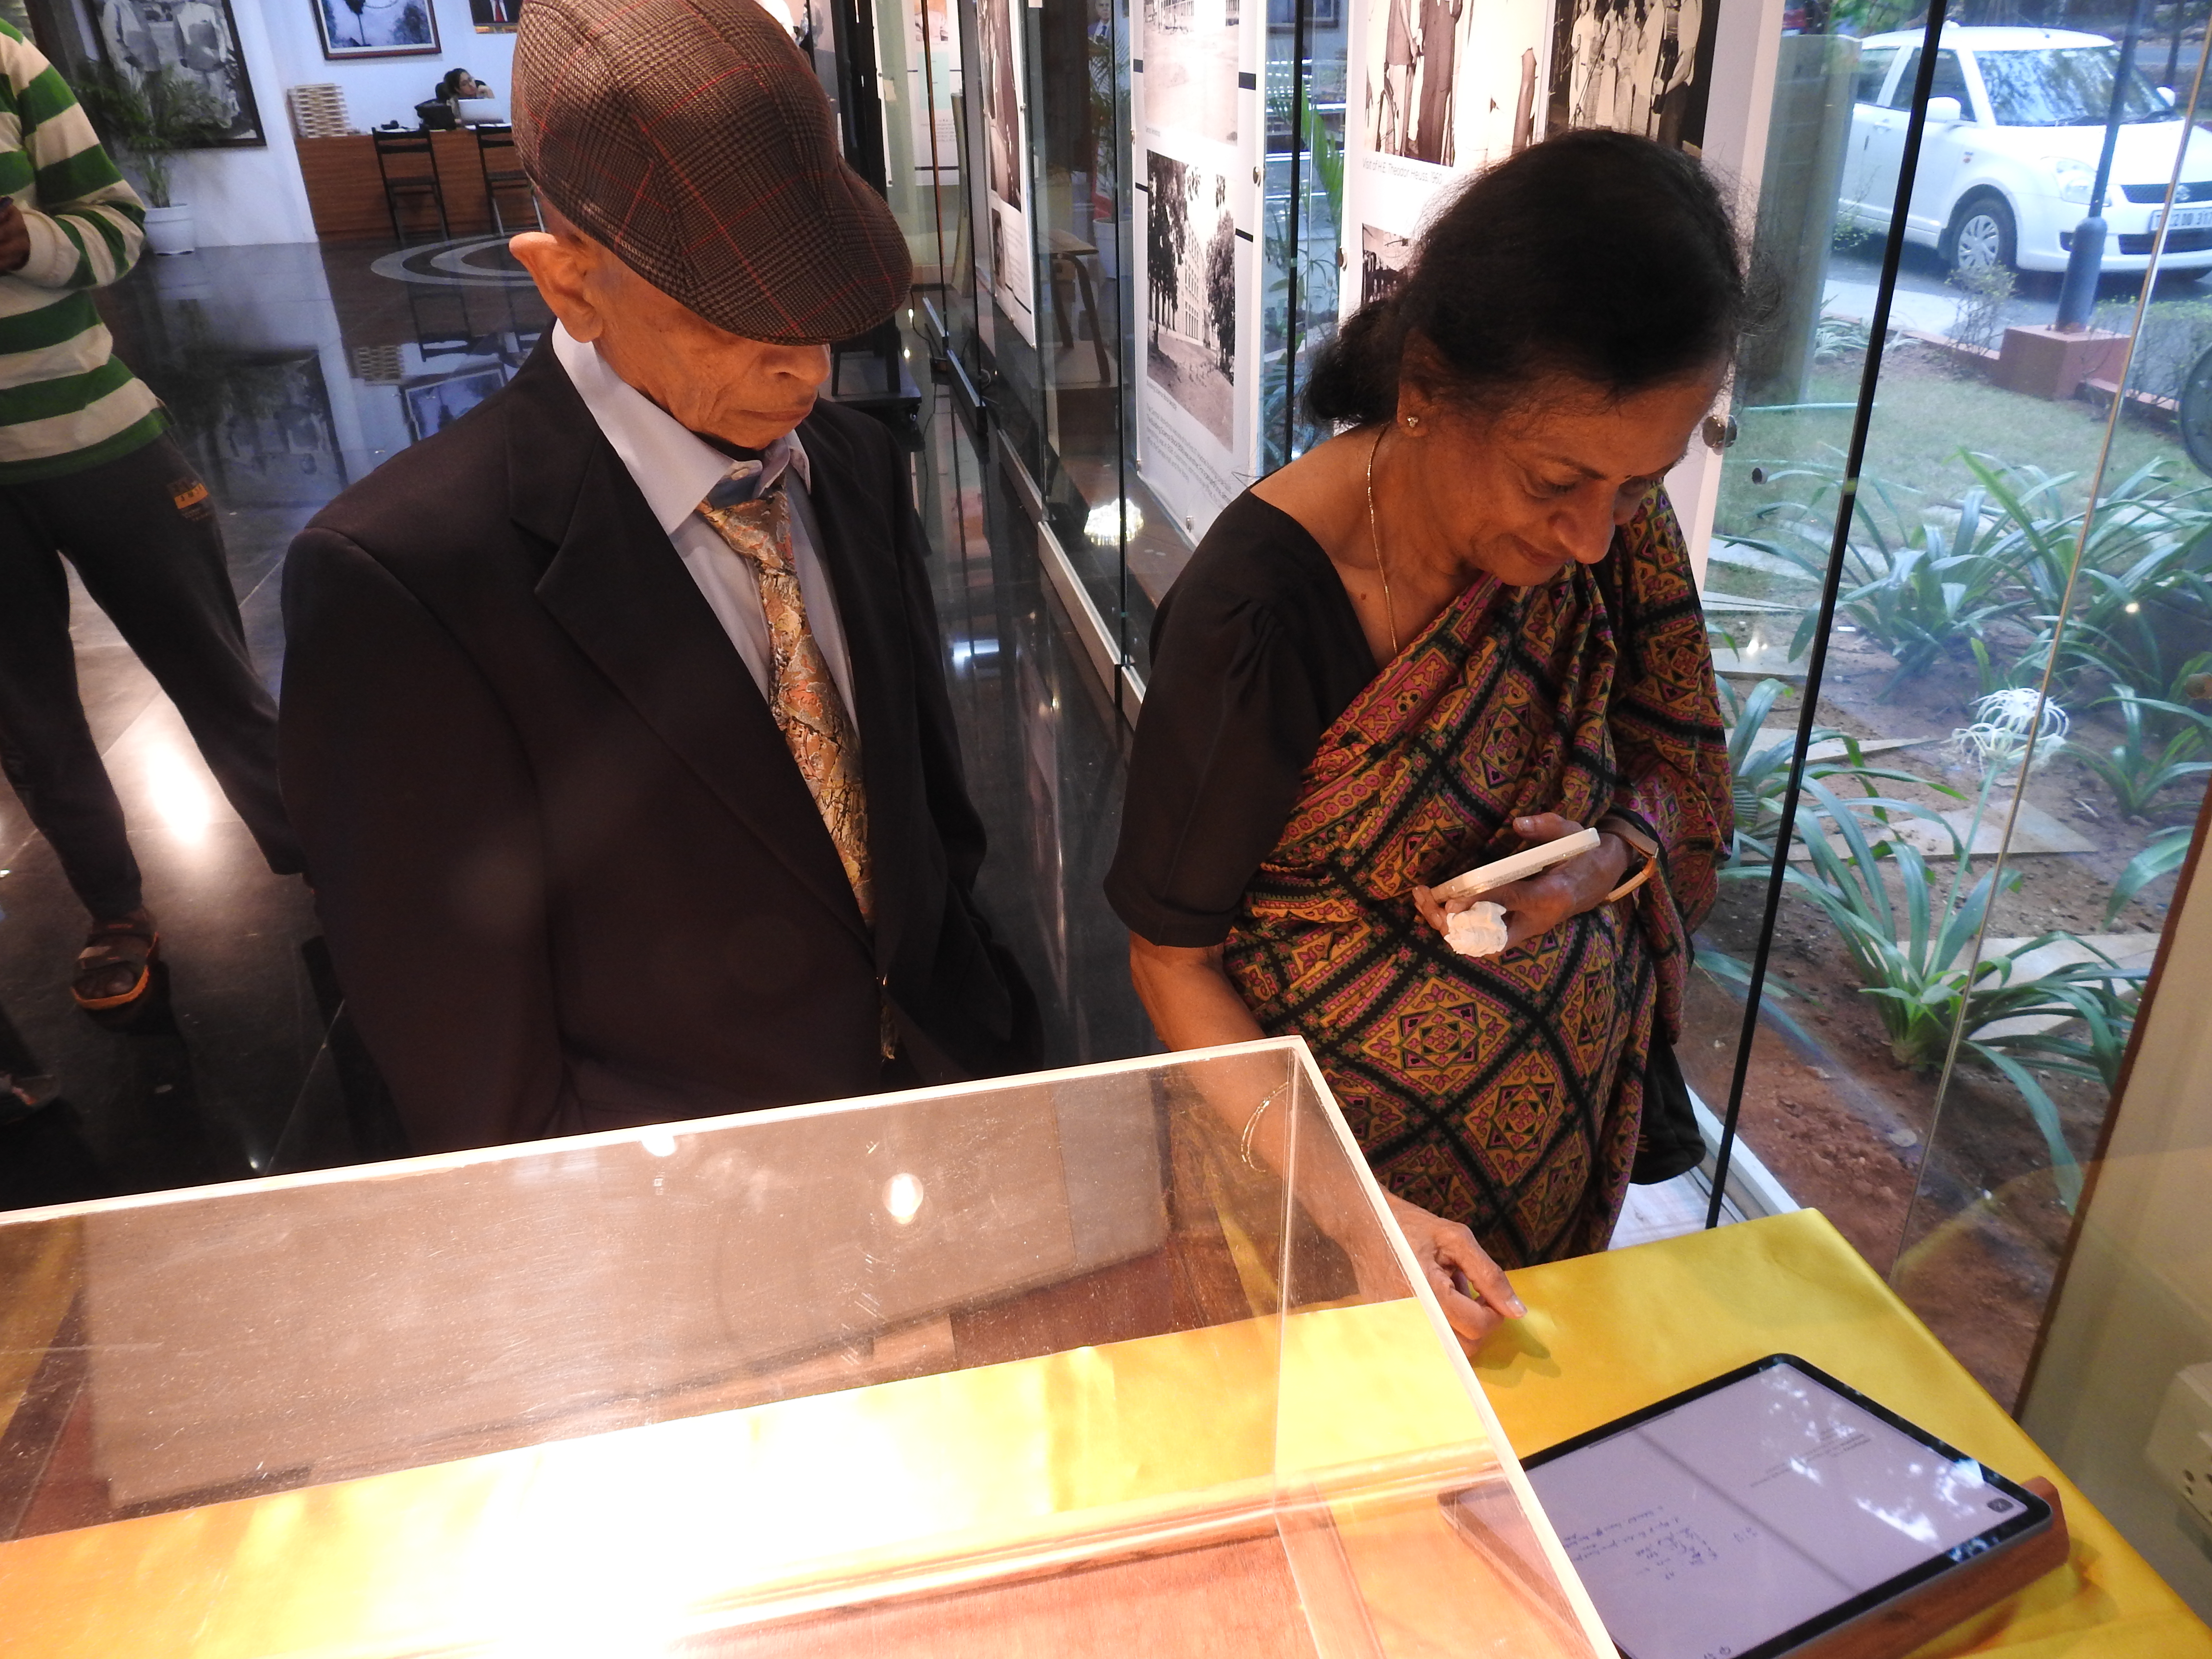 Mr. S. S. Mani Venkata and Mrs. Padma view the autograph book exhibit